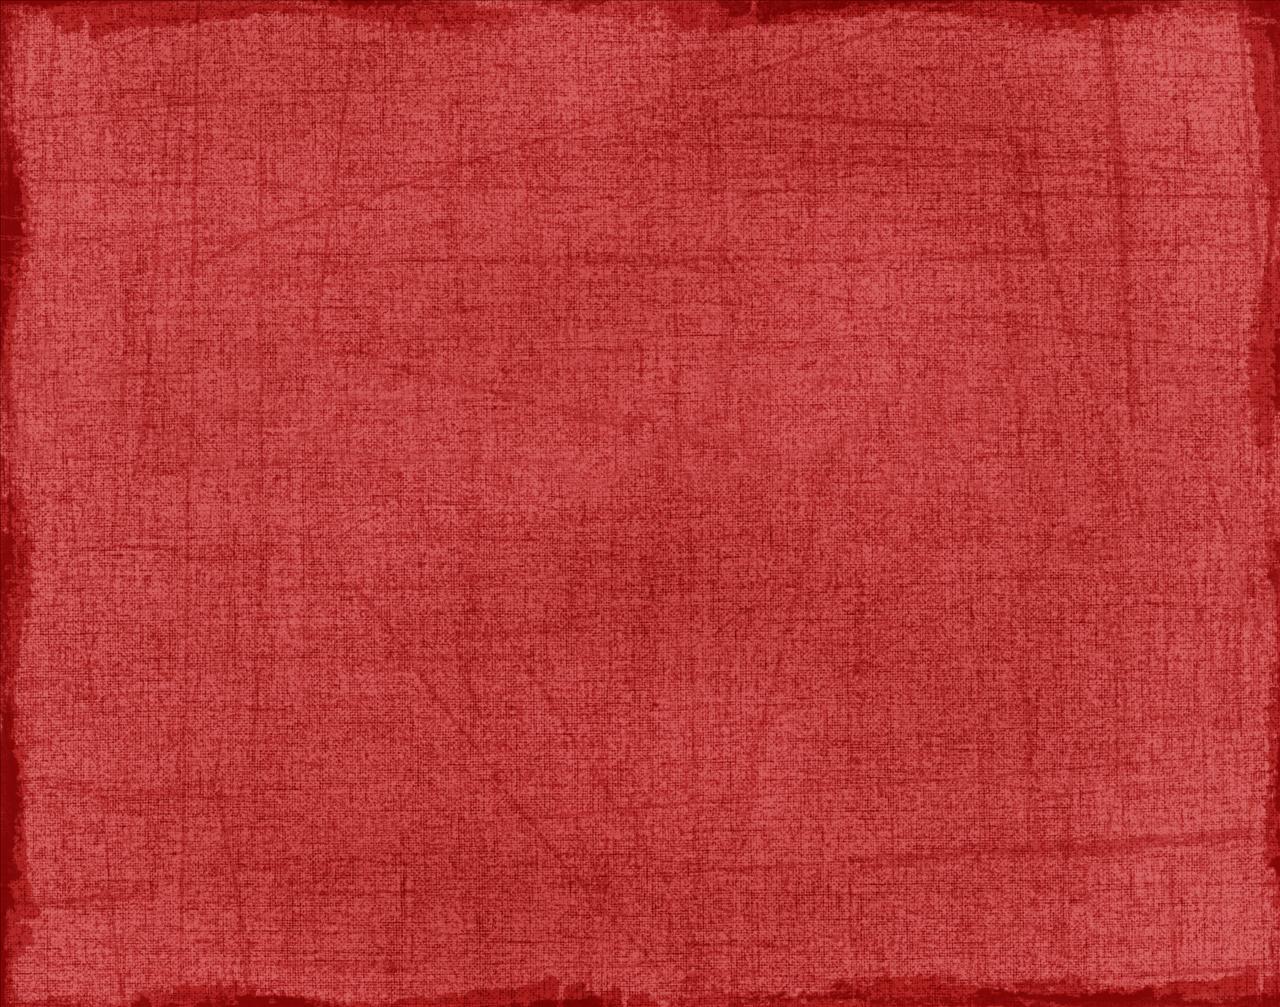 41+] Red Vintage Wallpaper - WallpaperSafari